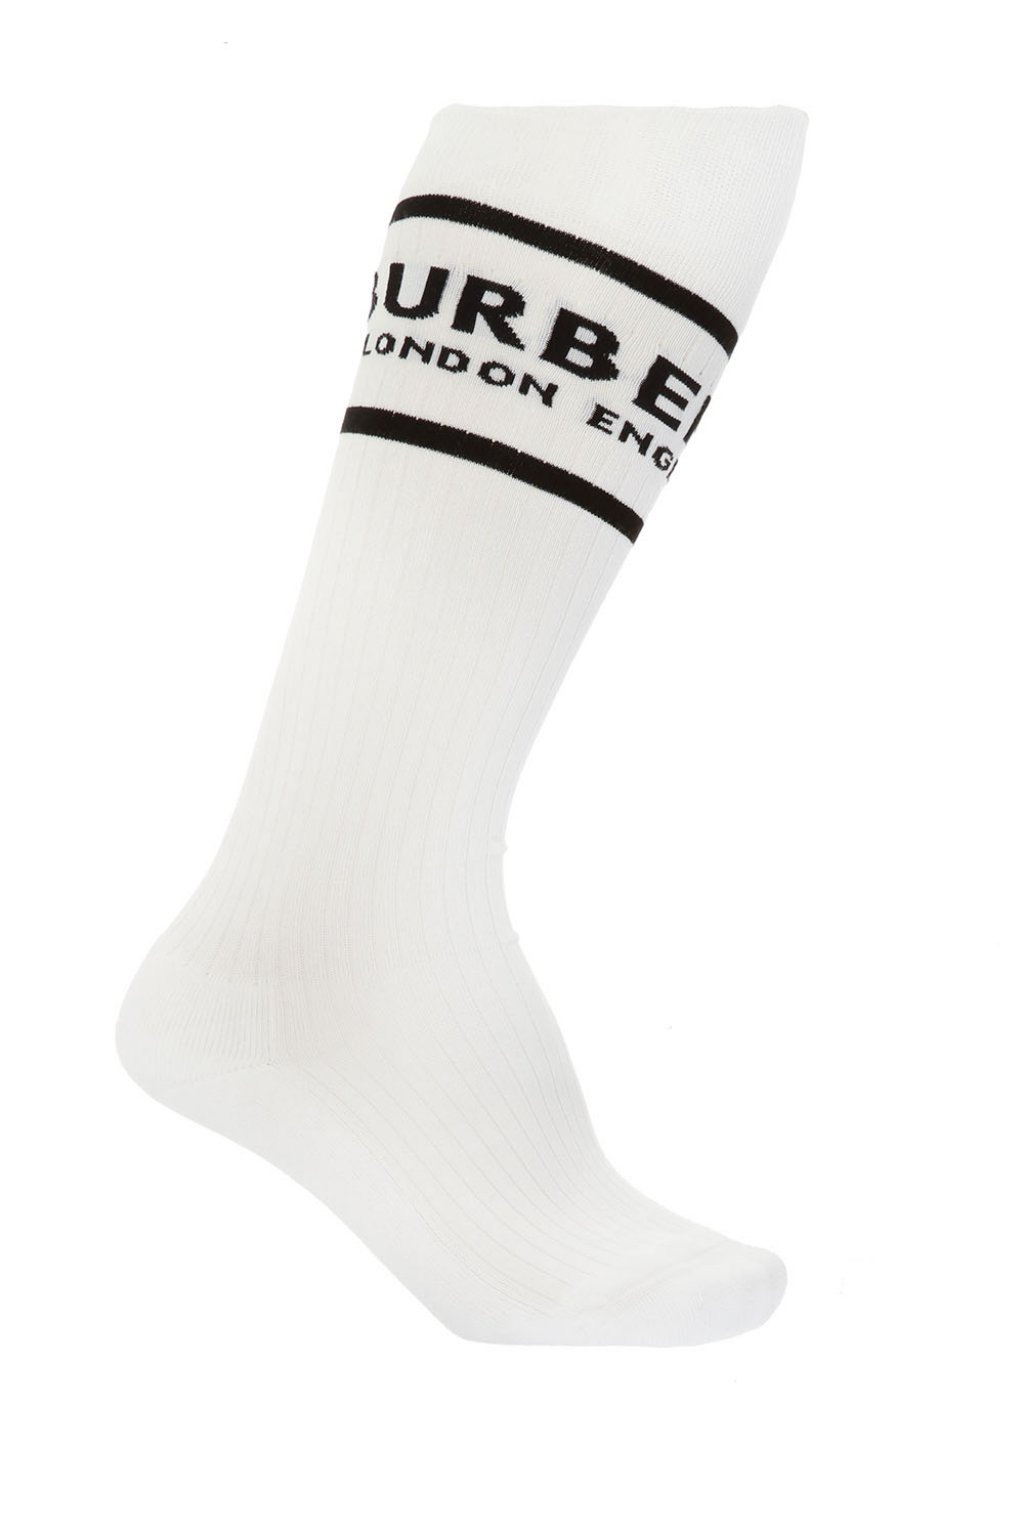 White Socks with logo Burberry - Vitkac France